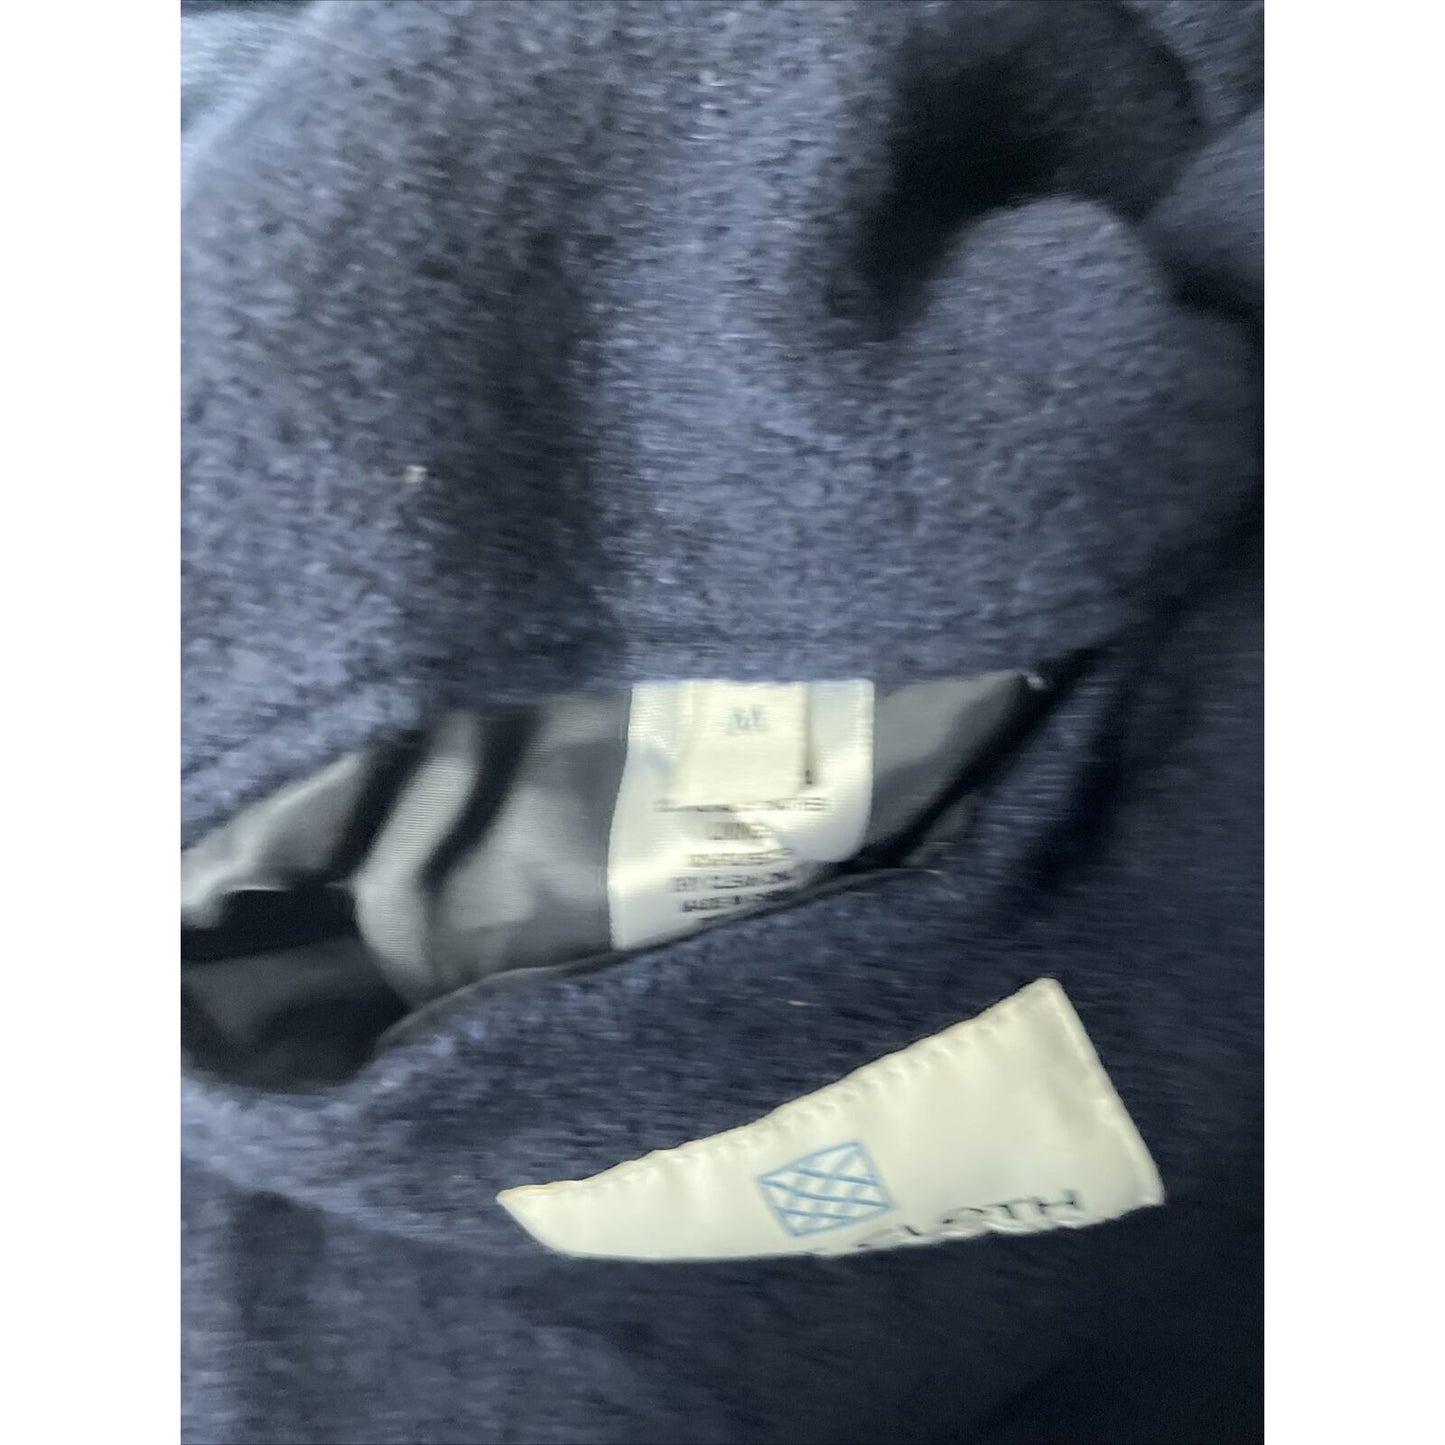 $295 SOFT CLOTH Men's Jersey Car Wool Blend Coat in Navy Size Medium